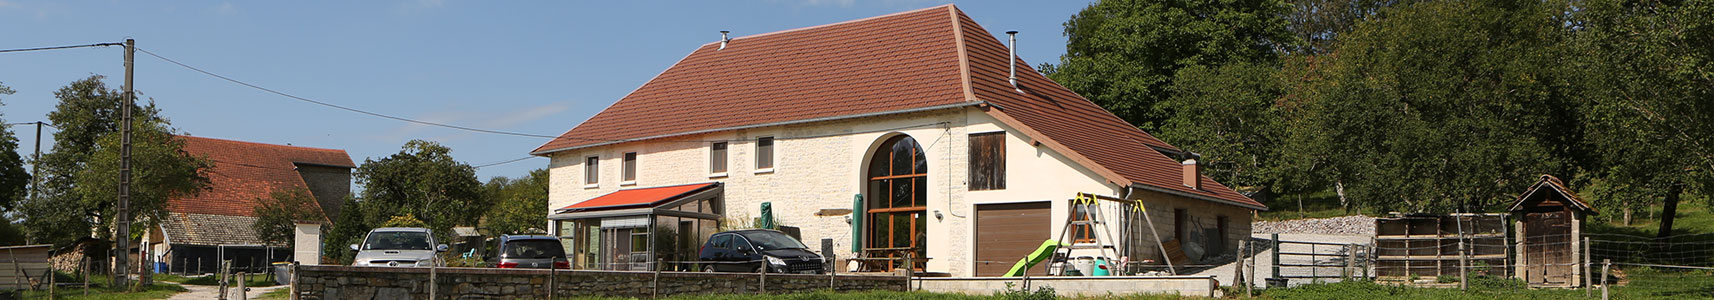 Gîte à Besançon, Besancon